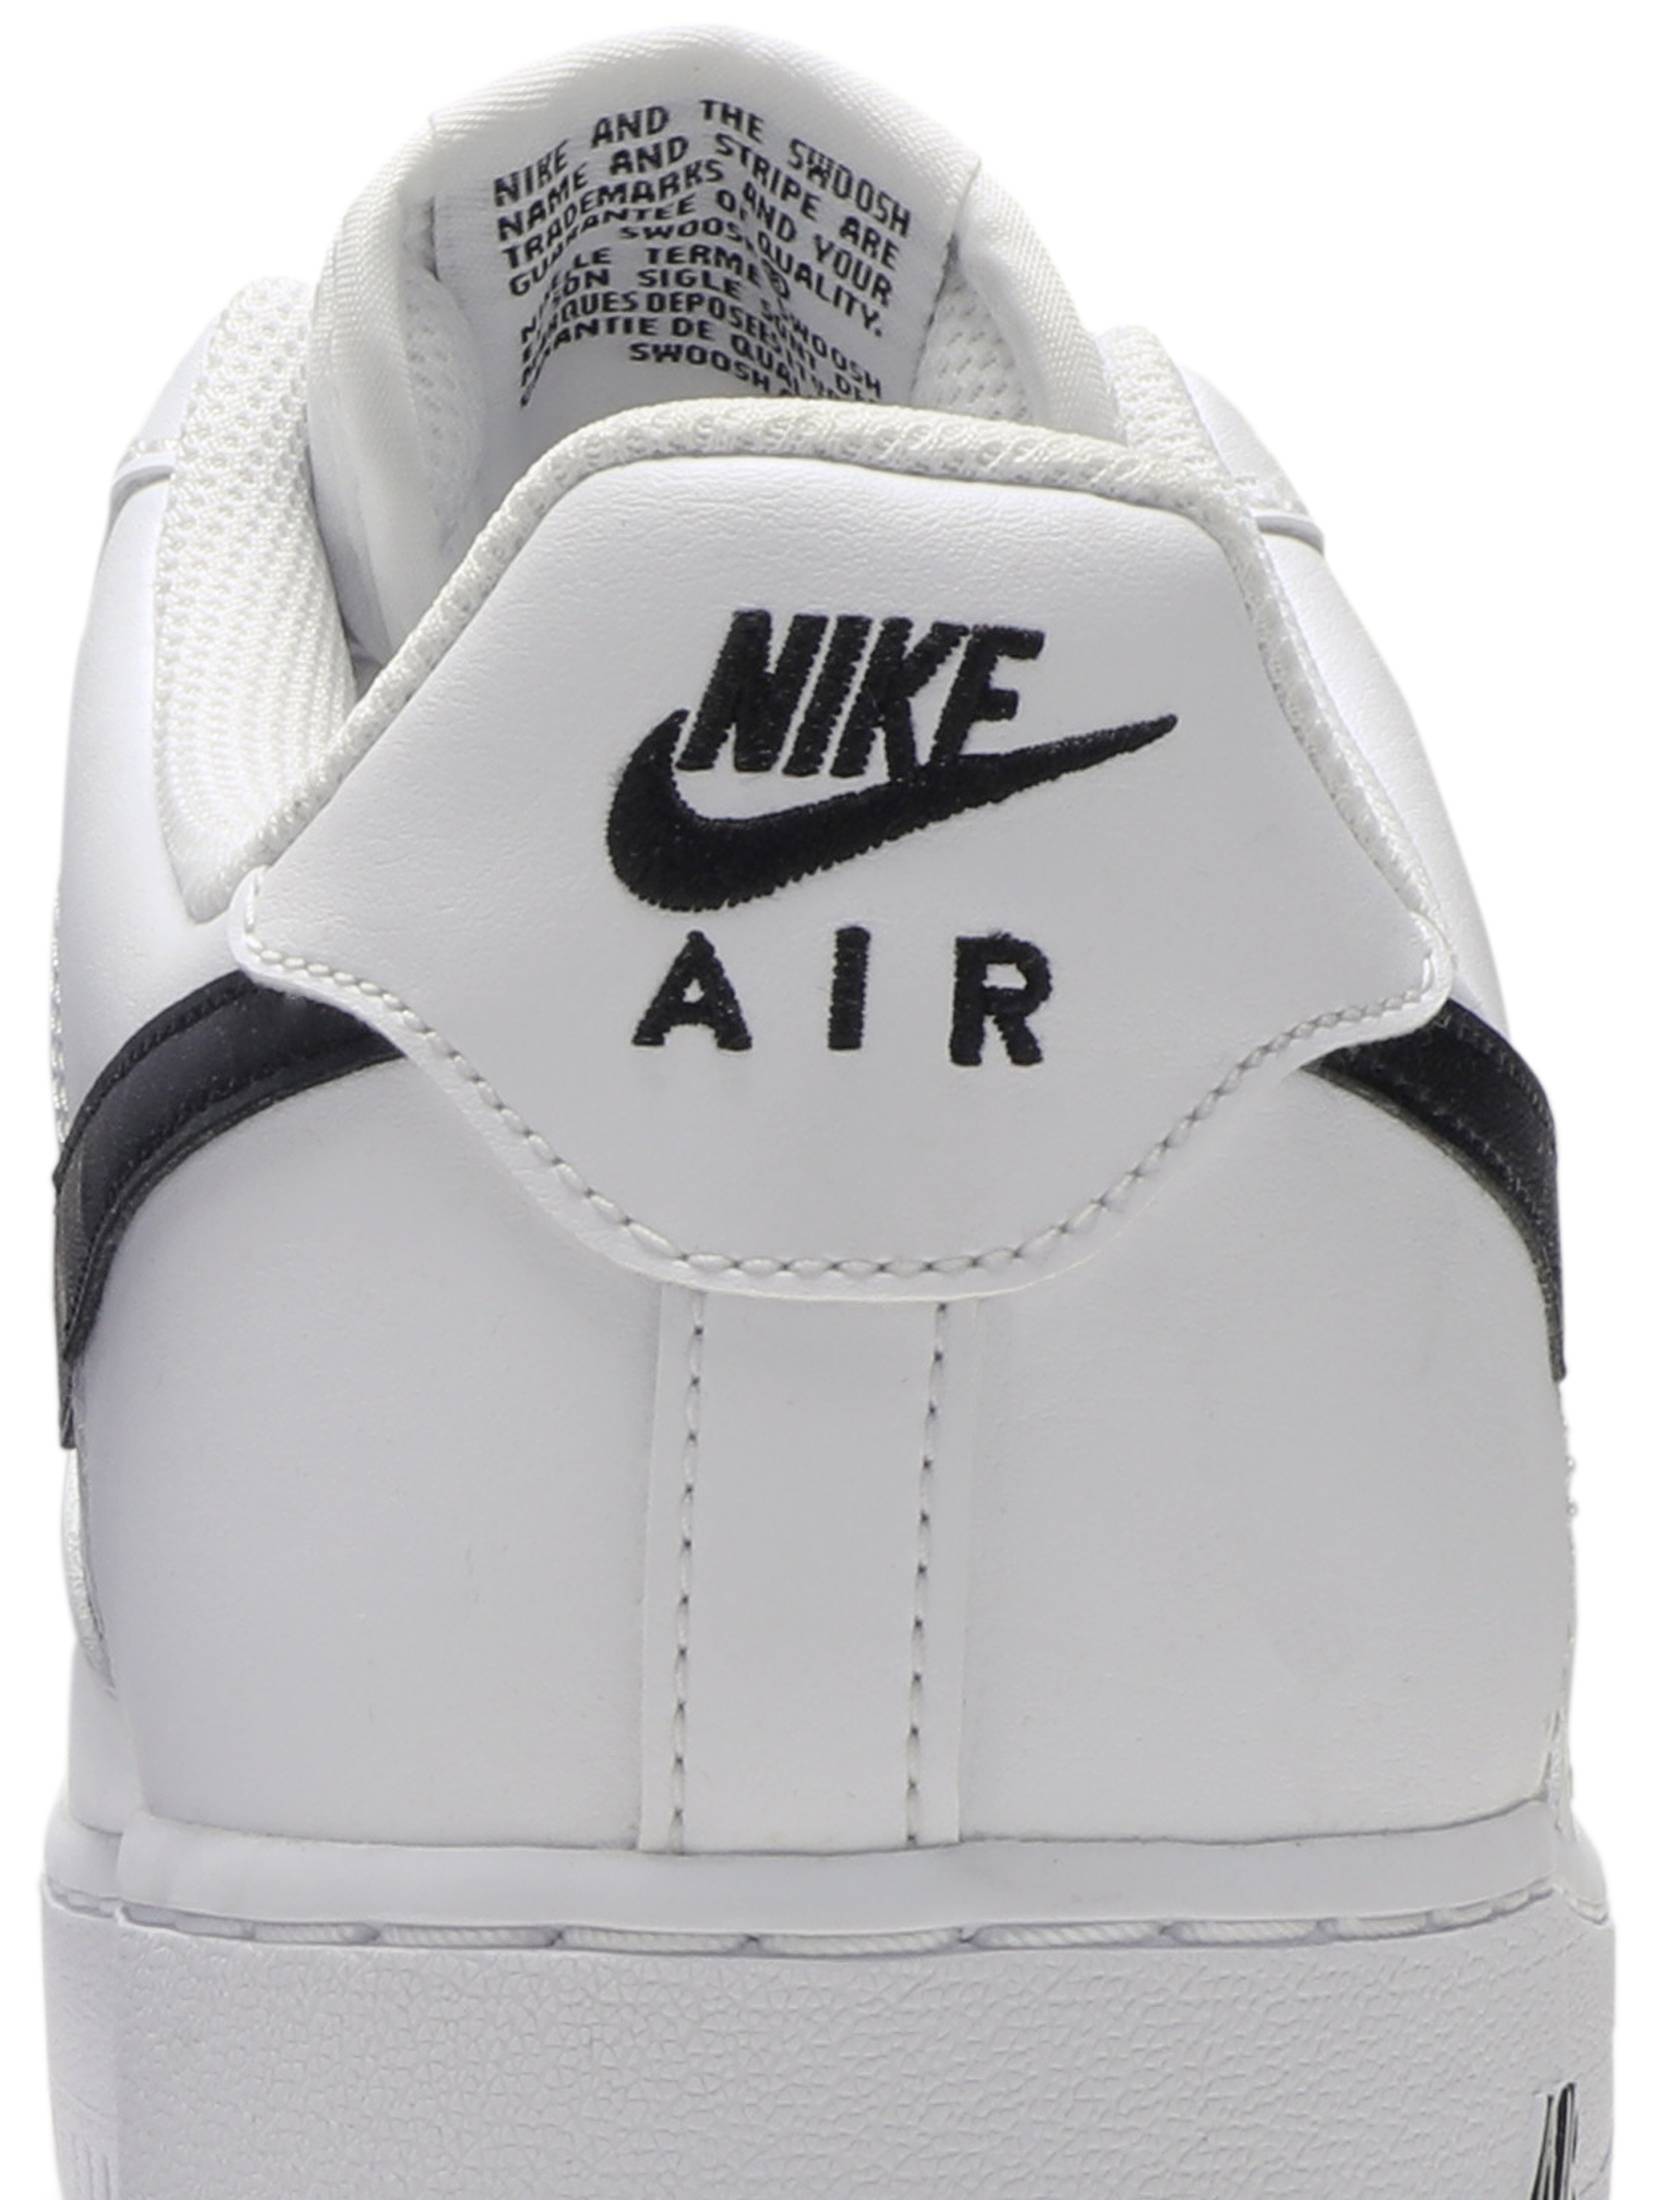 Air Force 1 '07 AN20 'White Black' - Nike - CJ0952 100 | GOAT